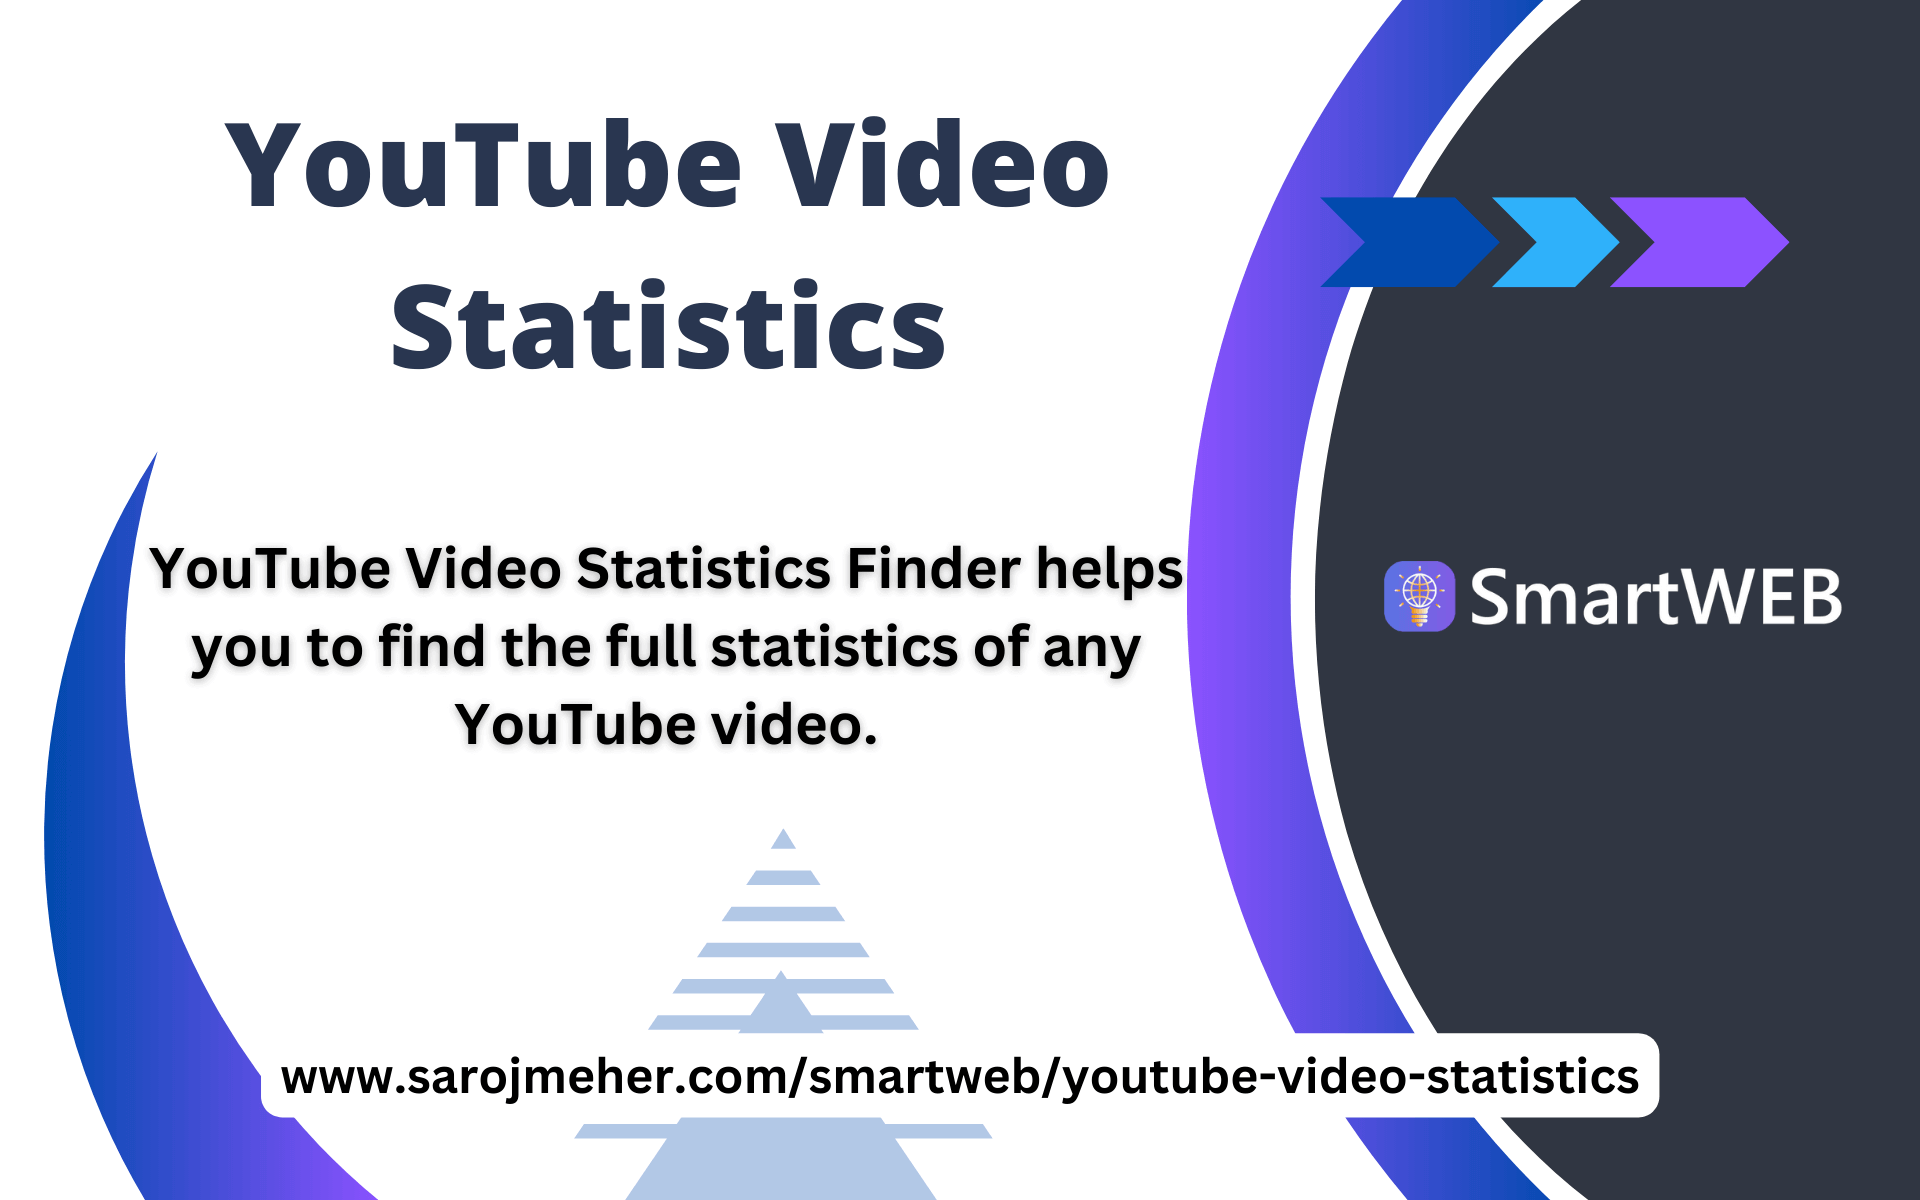 Statistiche video di YouTube